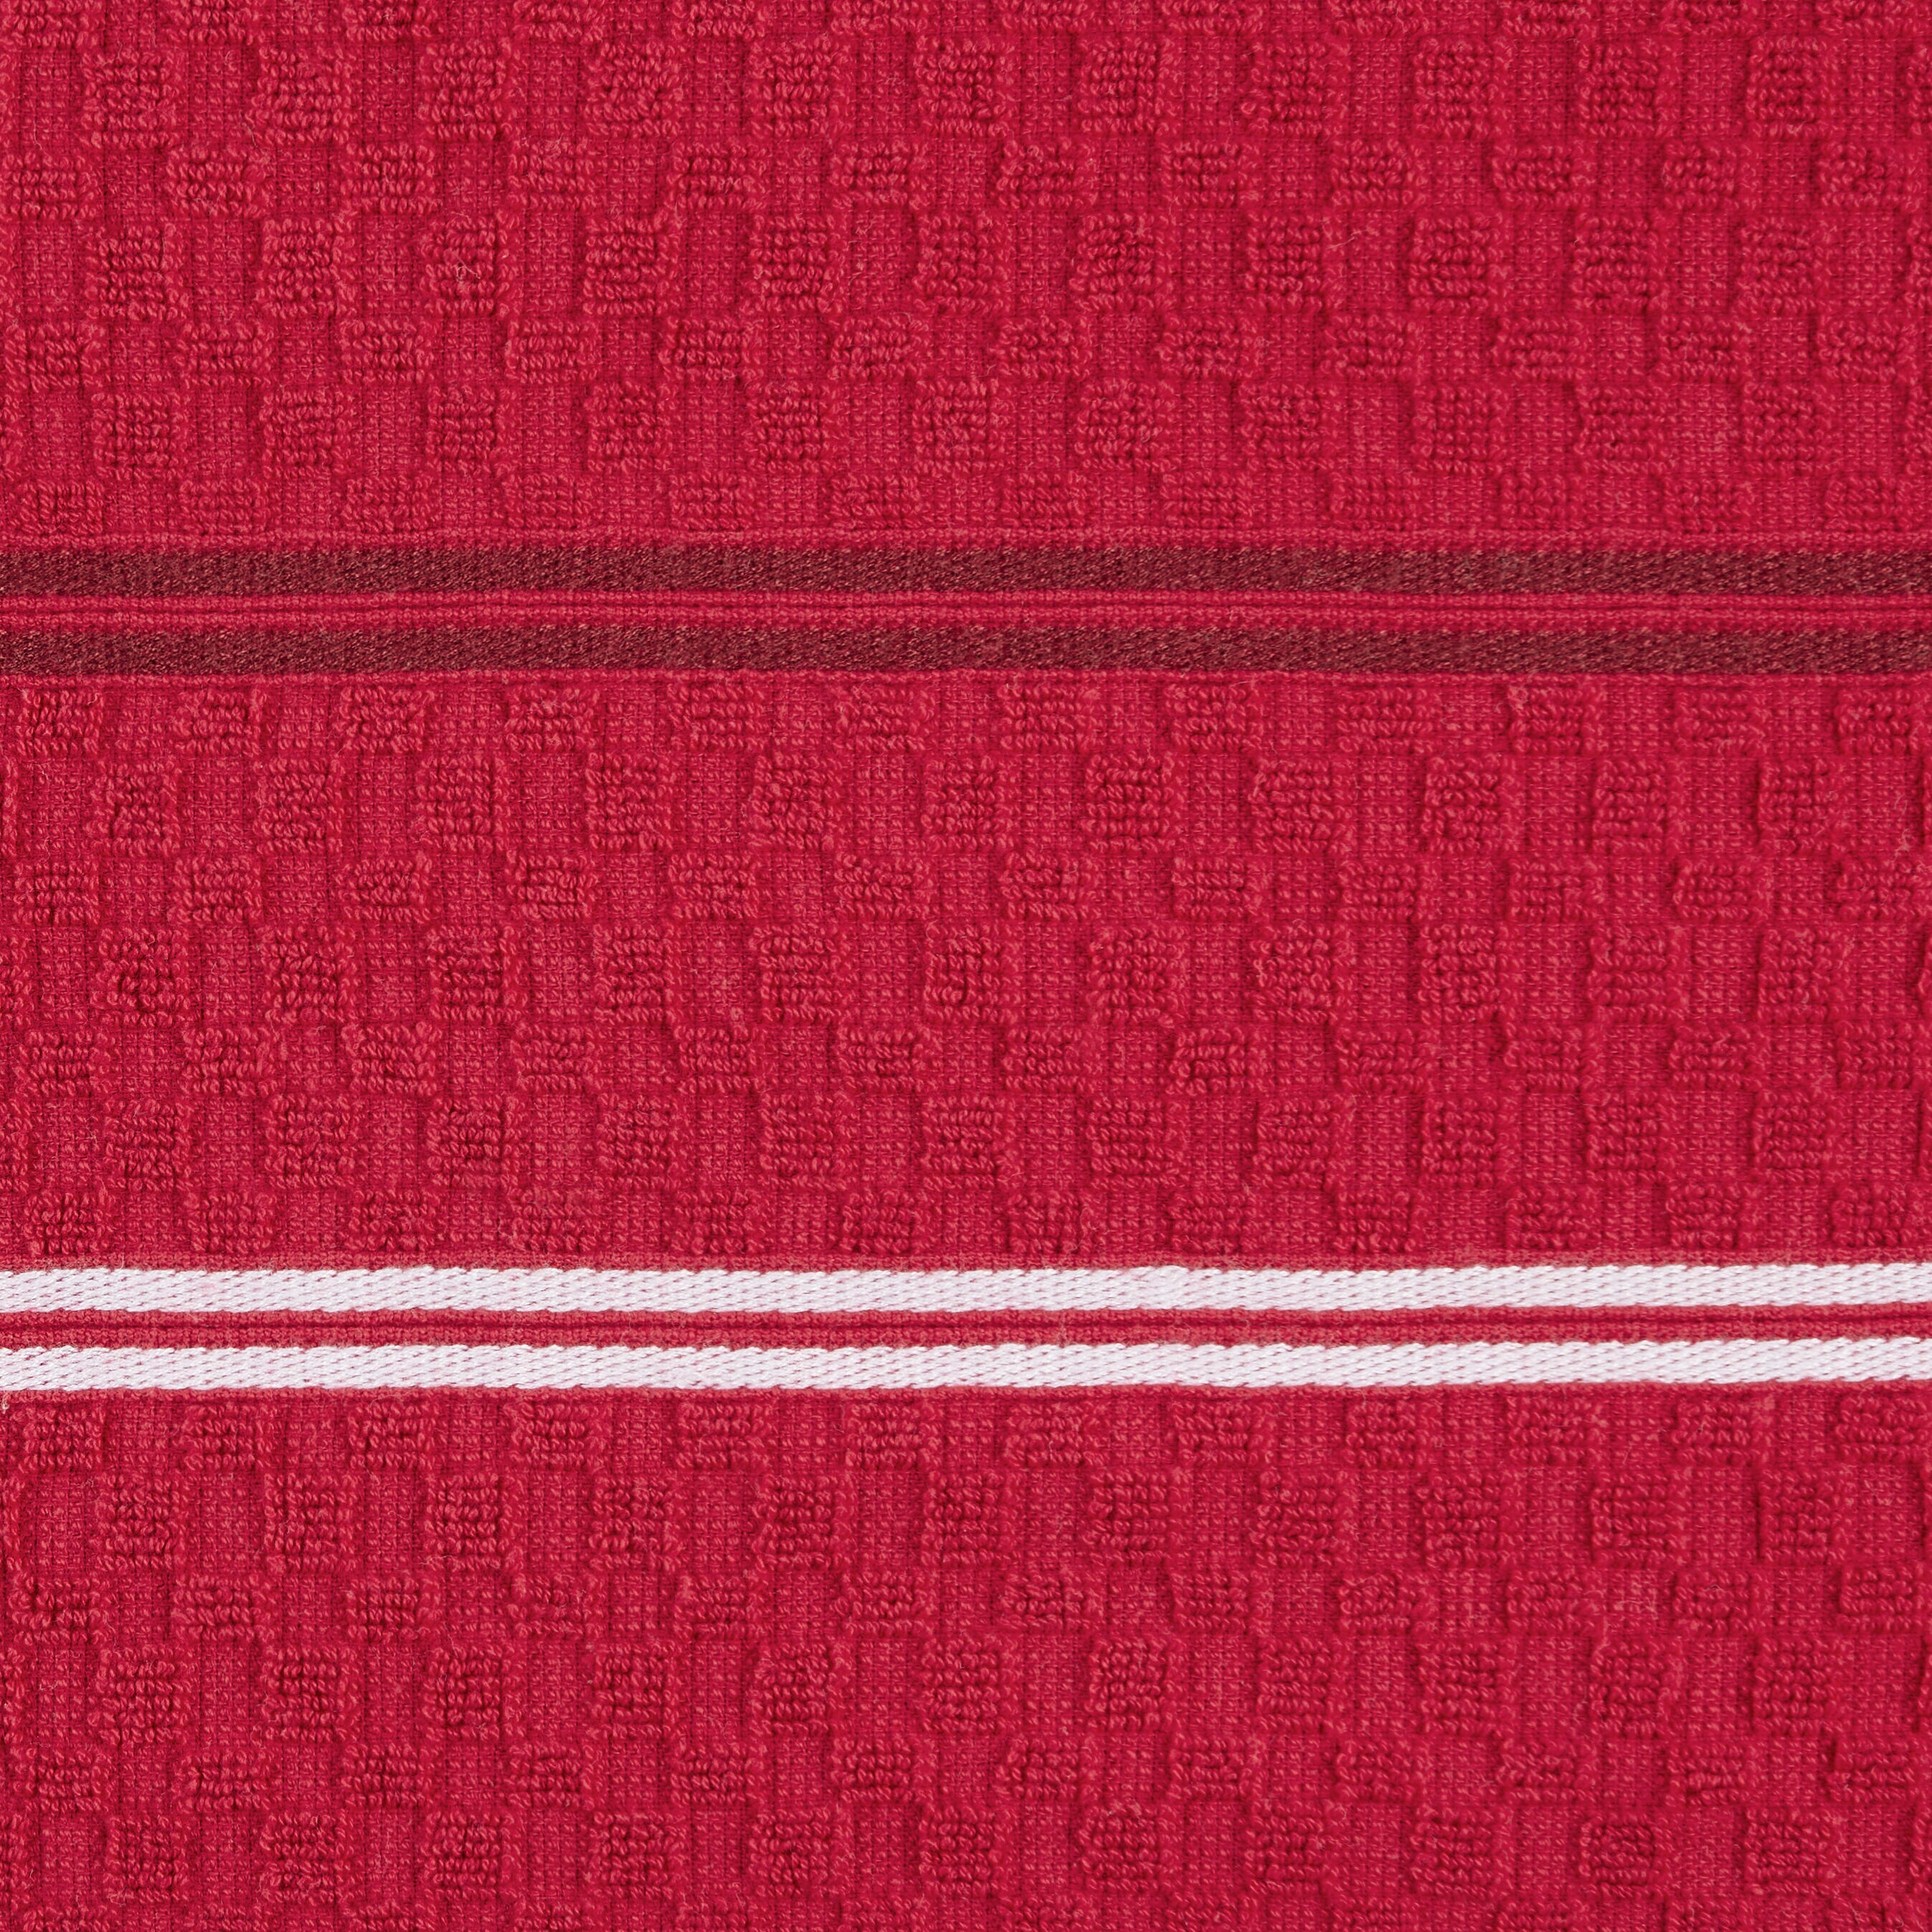 KitchenAid Stripe Gingham Dual Purpose Kitchen Towel 3-Pack Set, Matte  Grey, 16 x 28